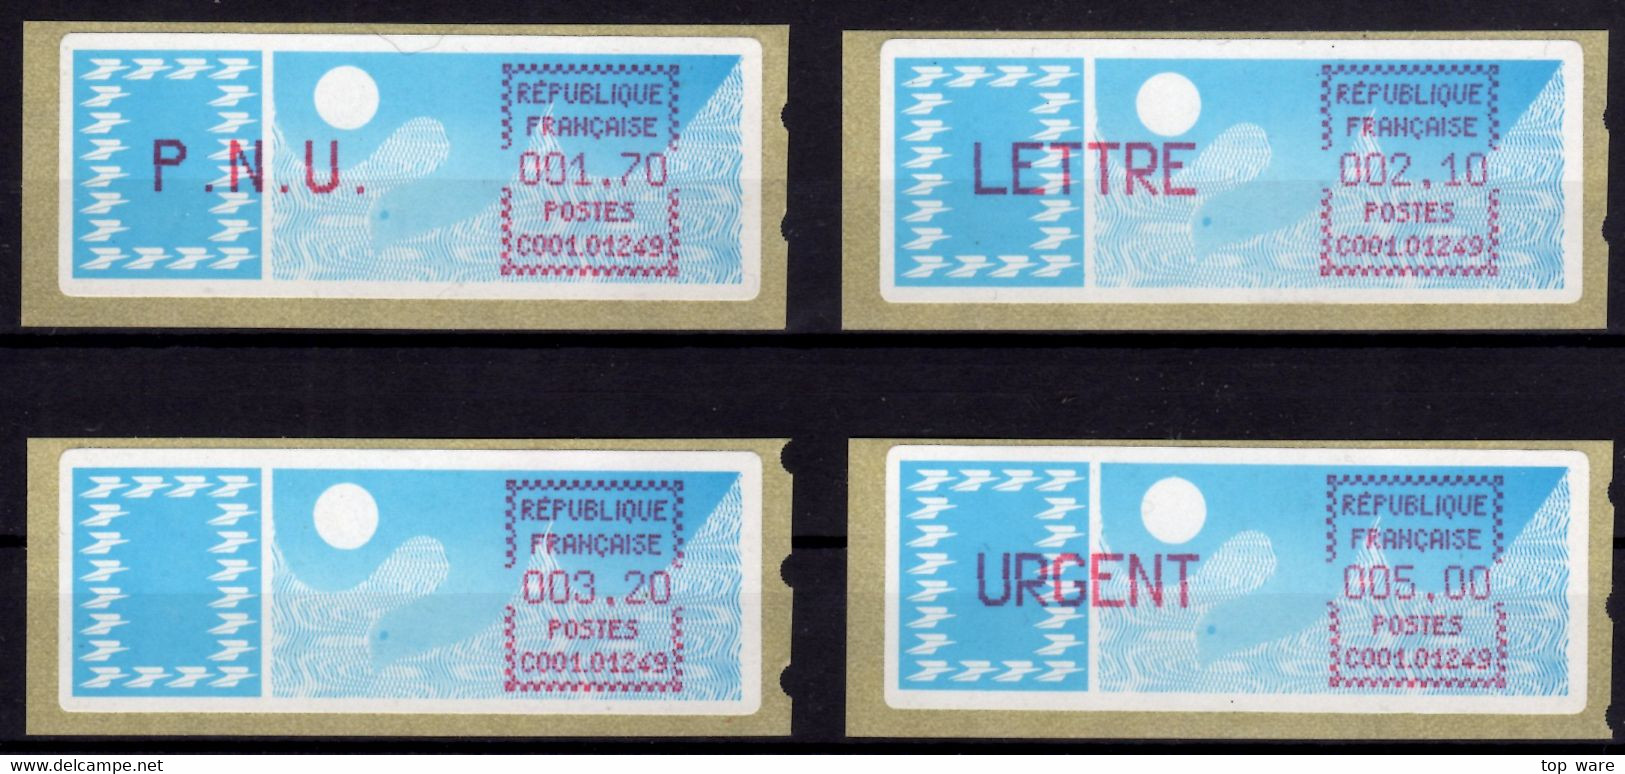 France ATM Stamps C001.01249 Michel 6.3 Zd Series ZS1 Neuf / MNH / Crouzet LSA Distributeurs Automatenmarken Frama Lisa - 1985 « Carrier » Paper